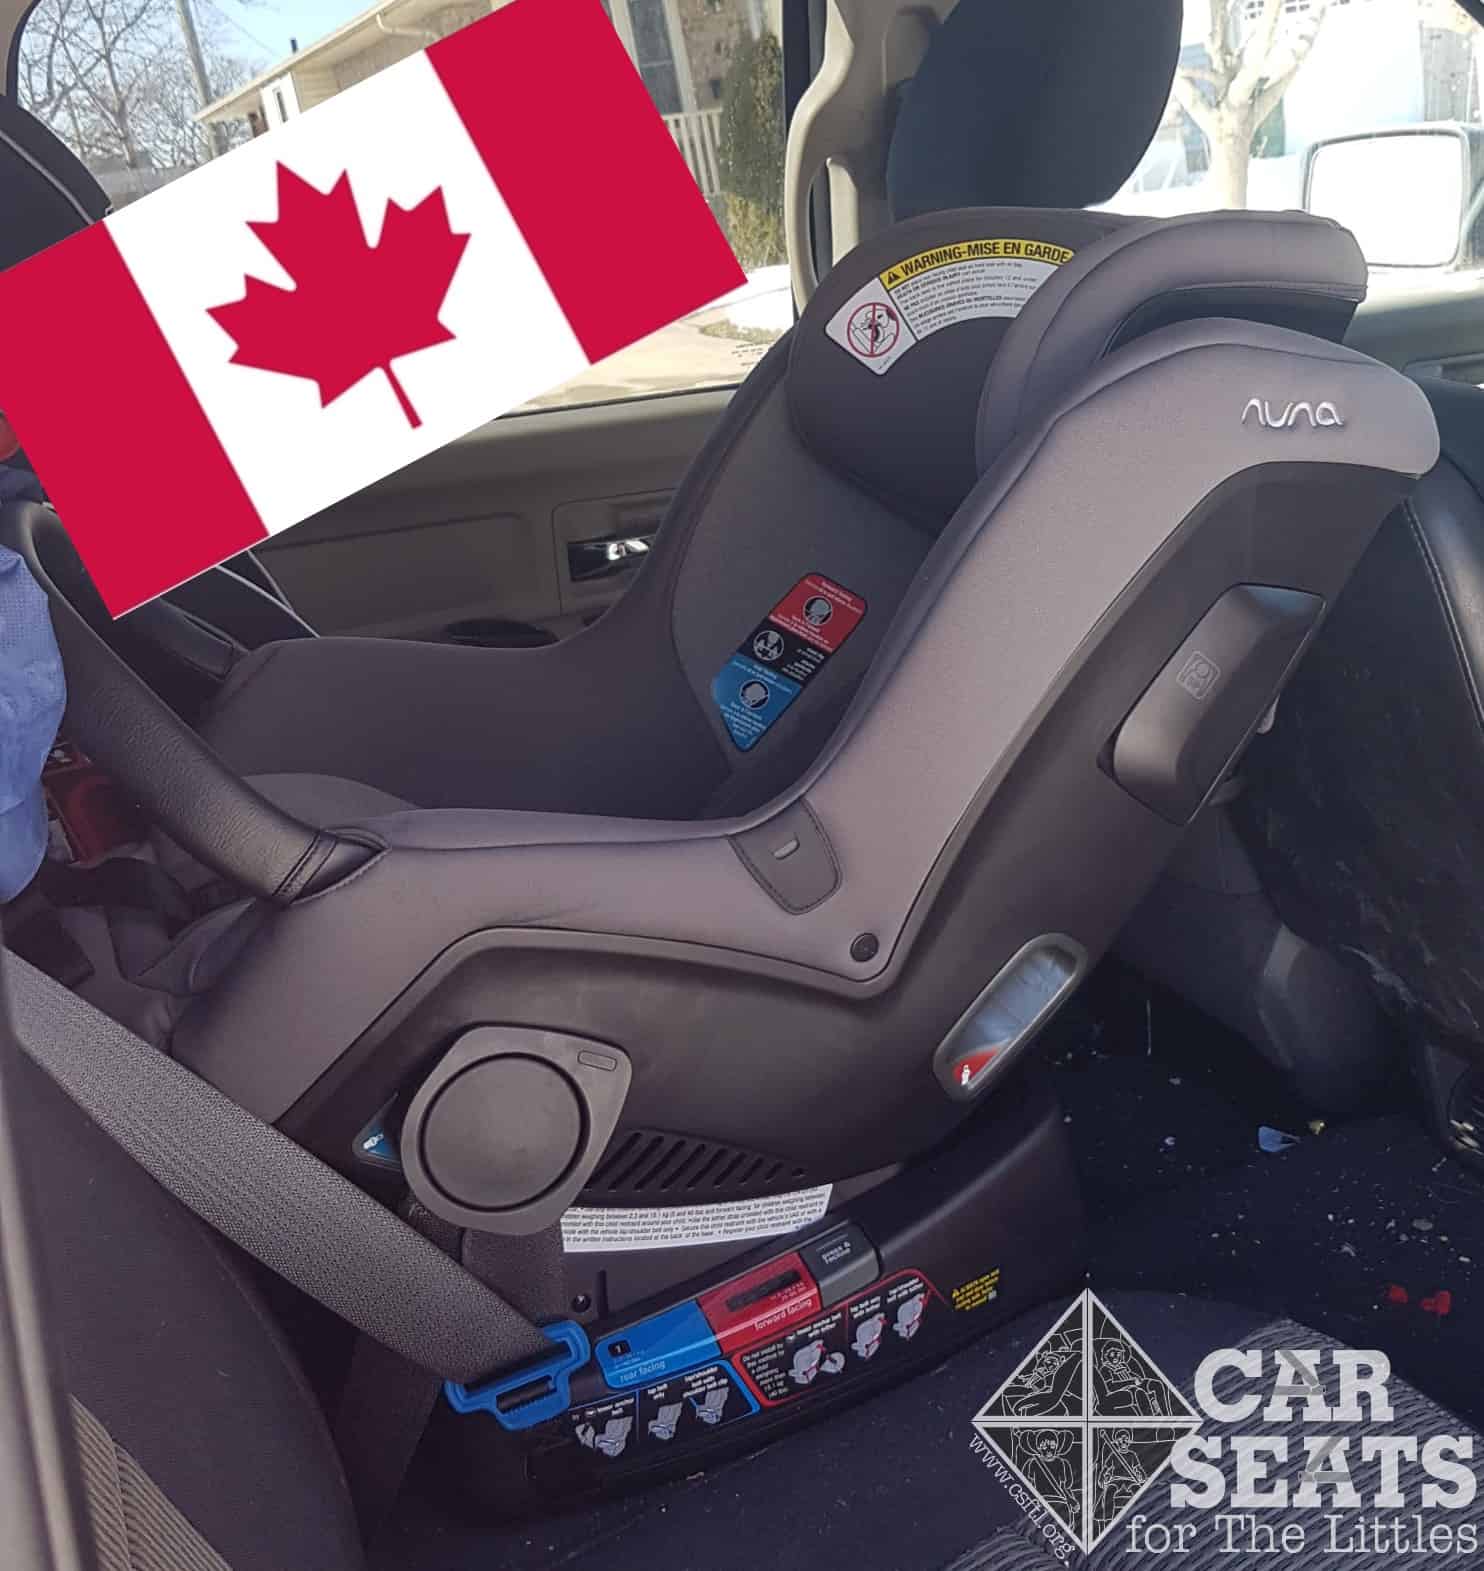 2019 nuna rava convertible car seat